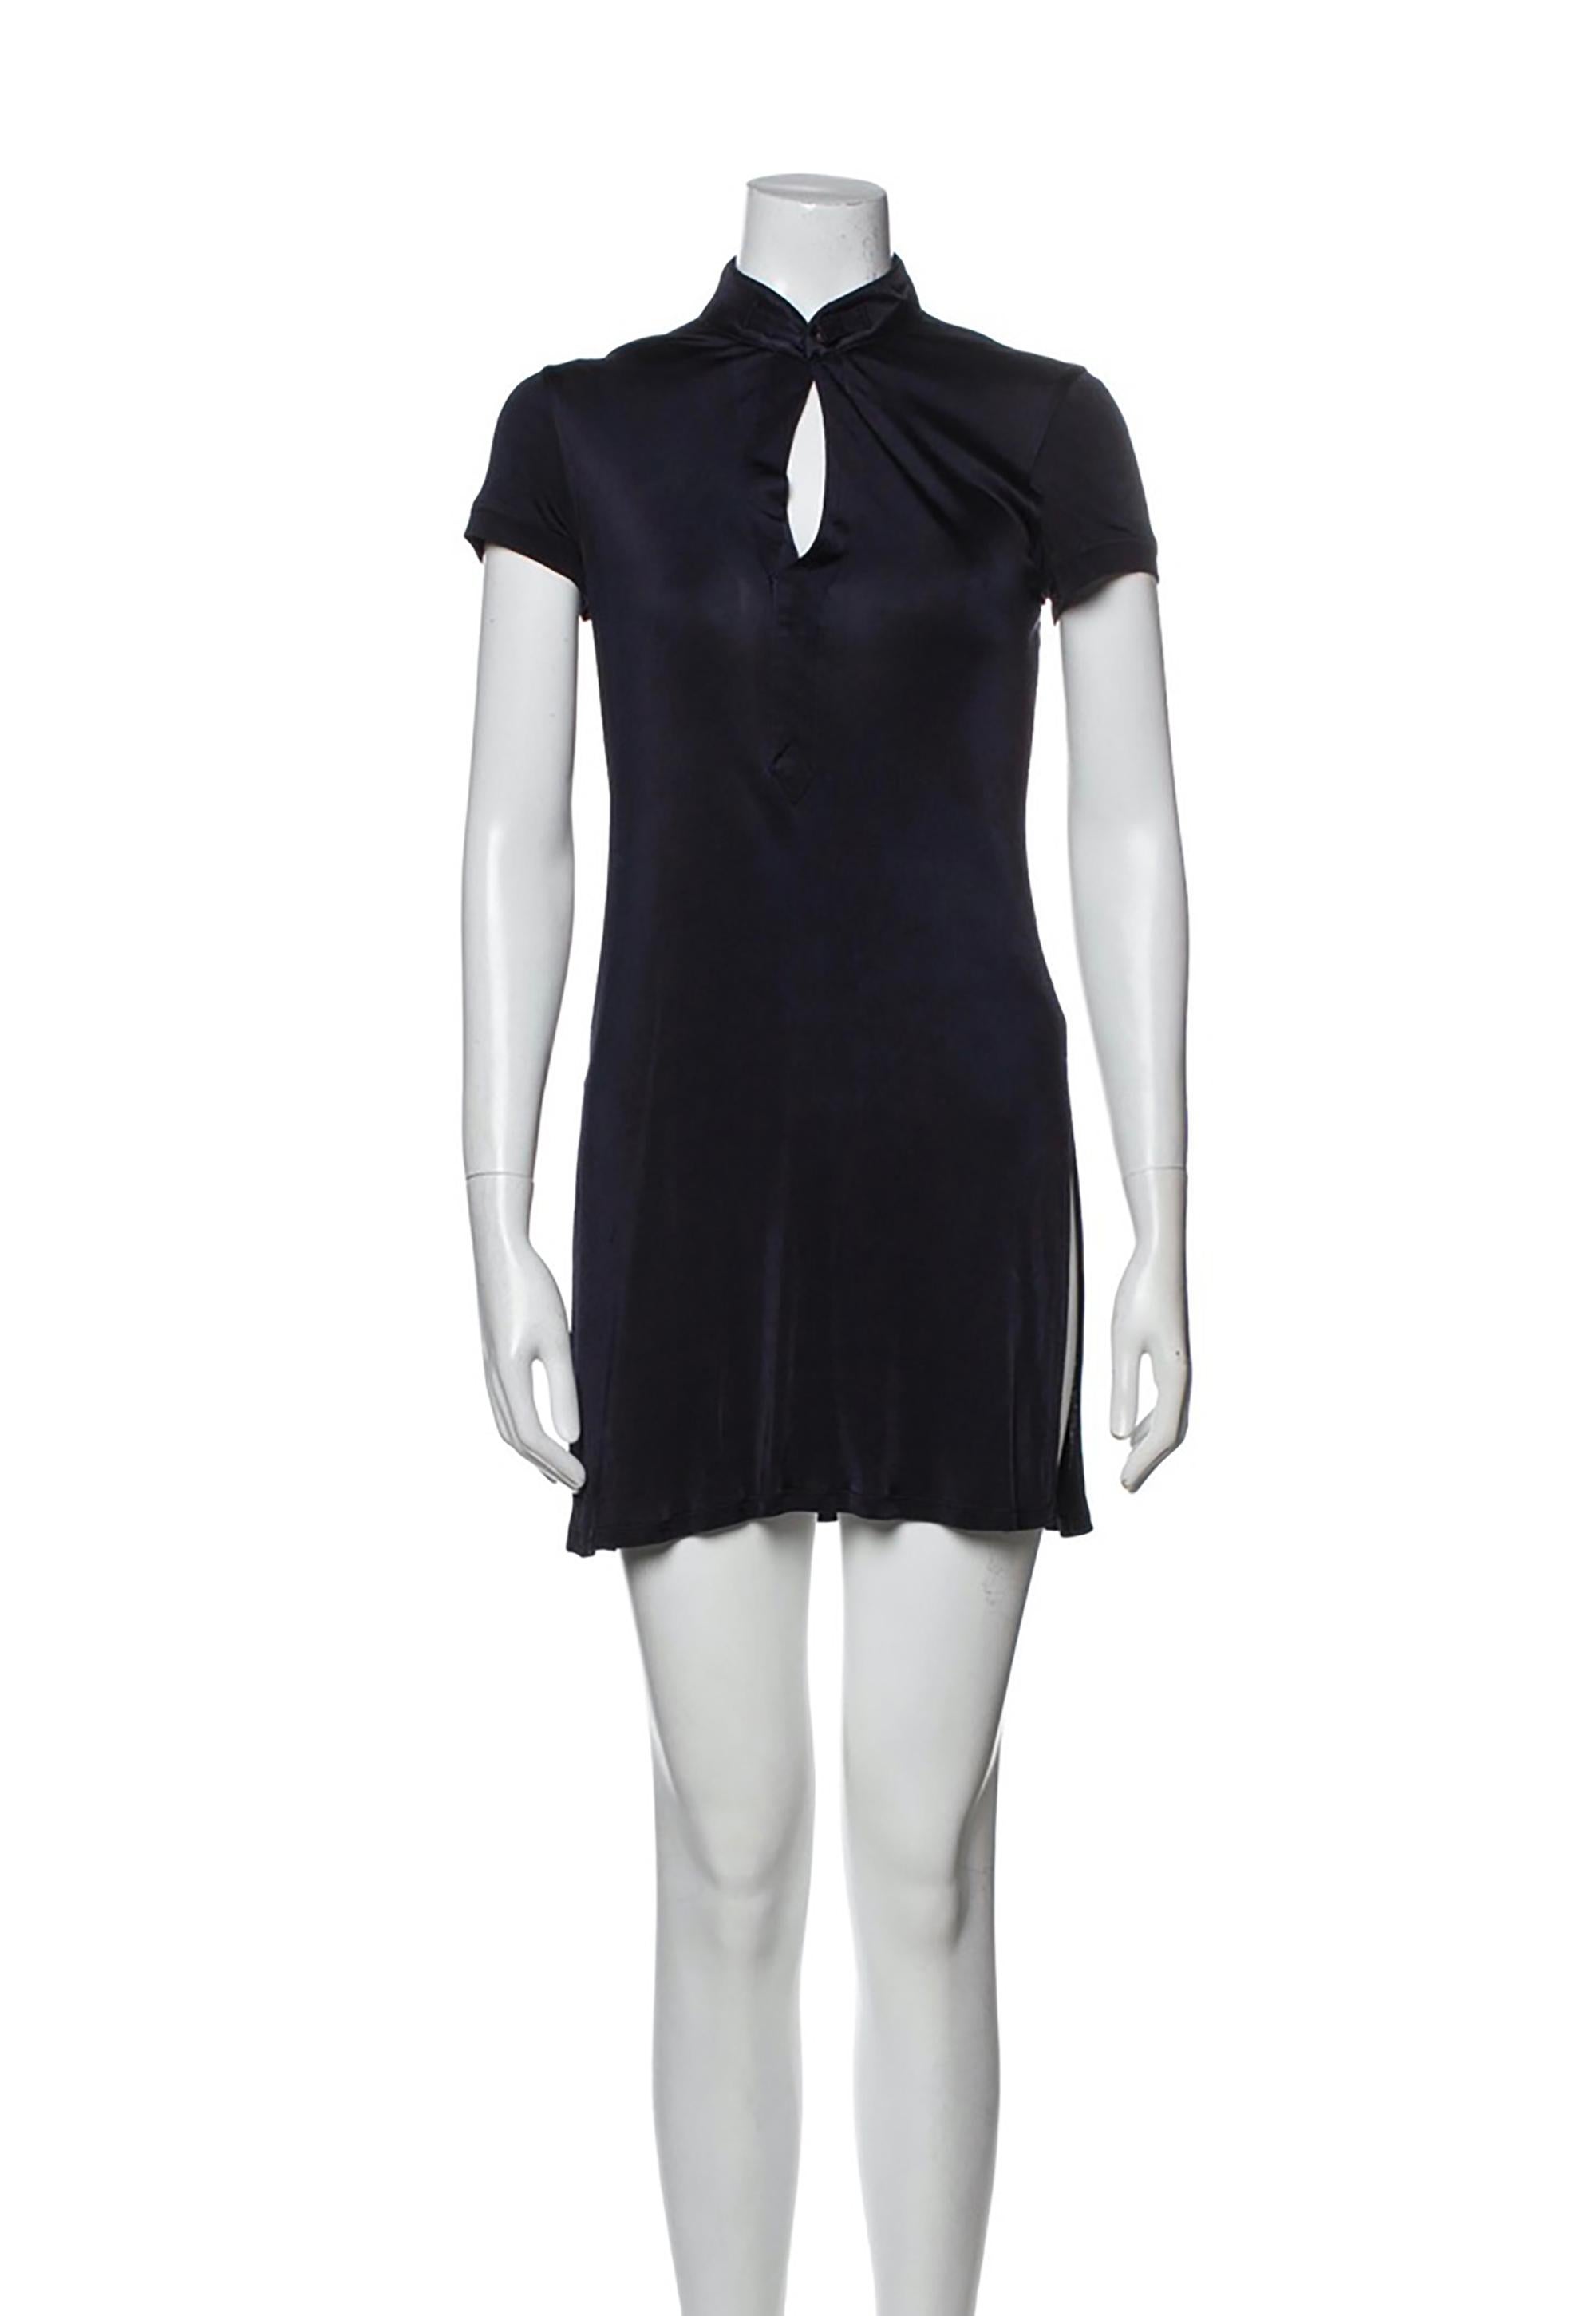 Black Jean Paul Gaultier mini dress 1990s For Sale